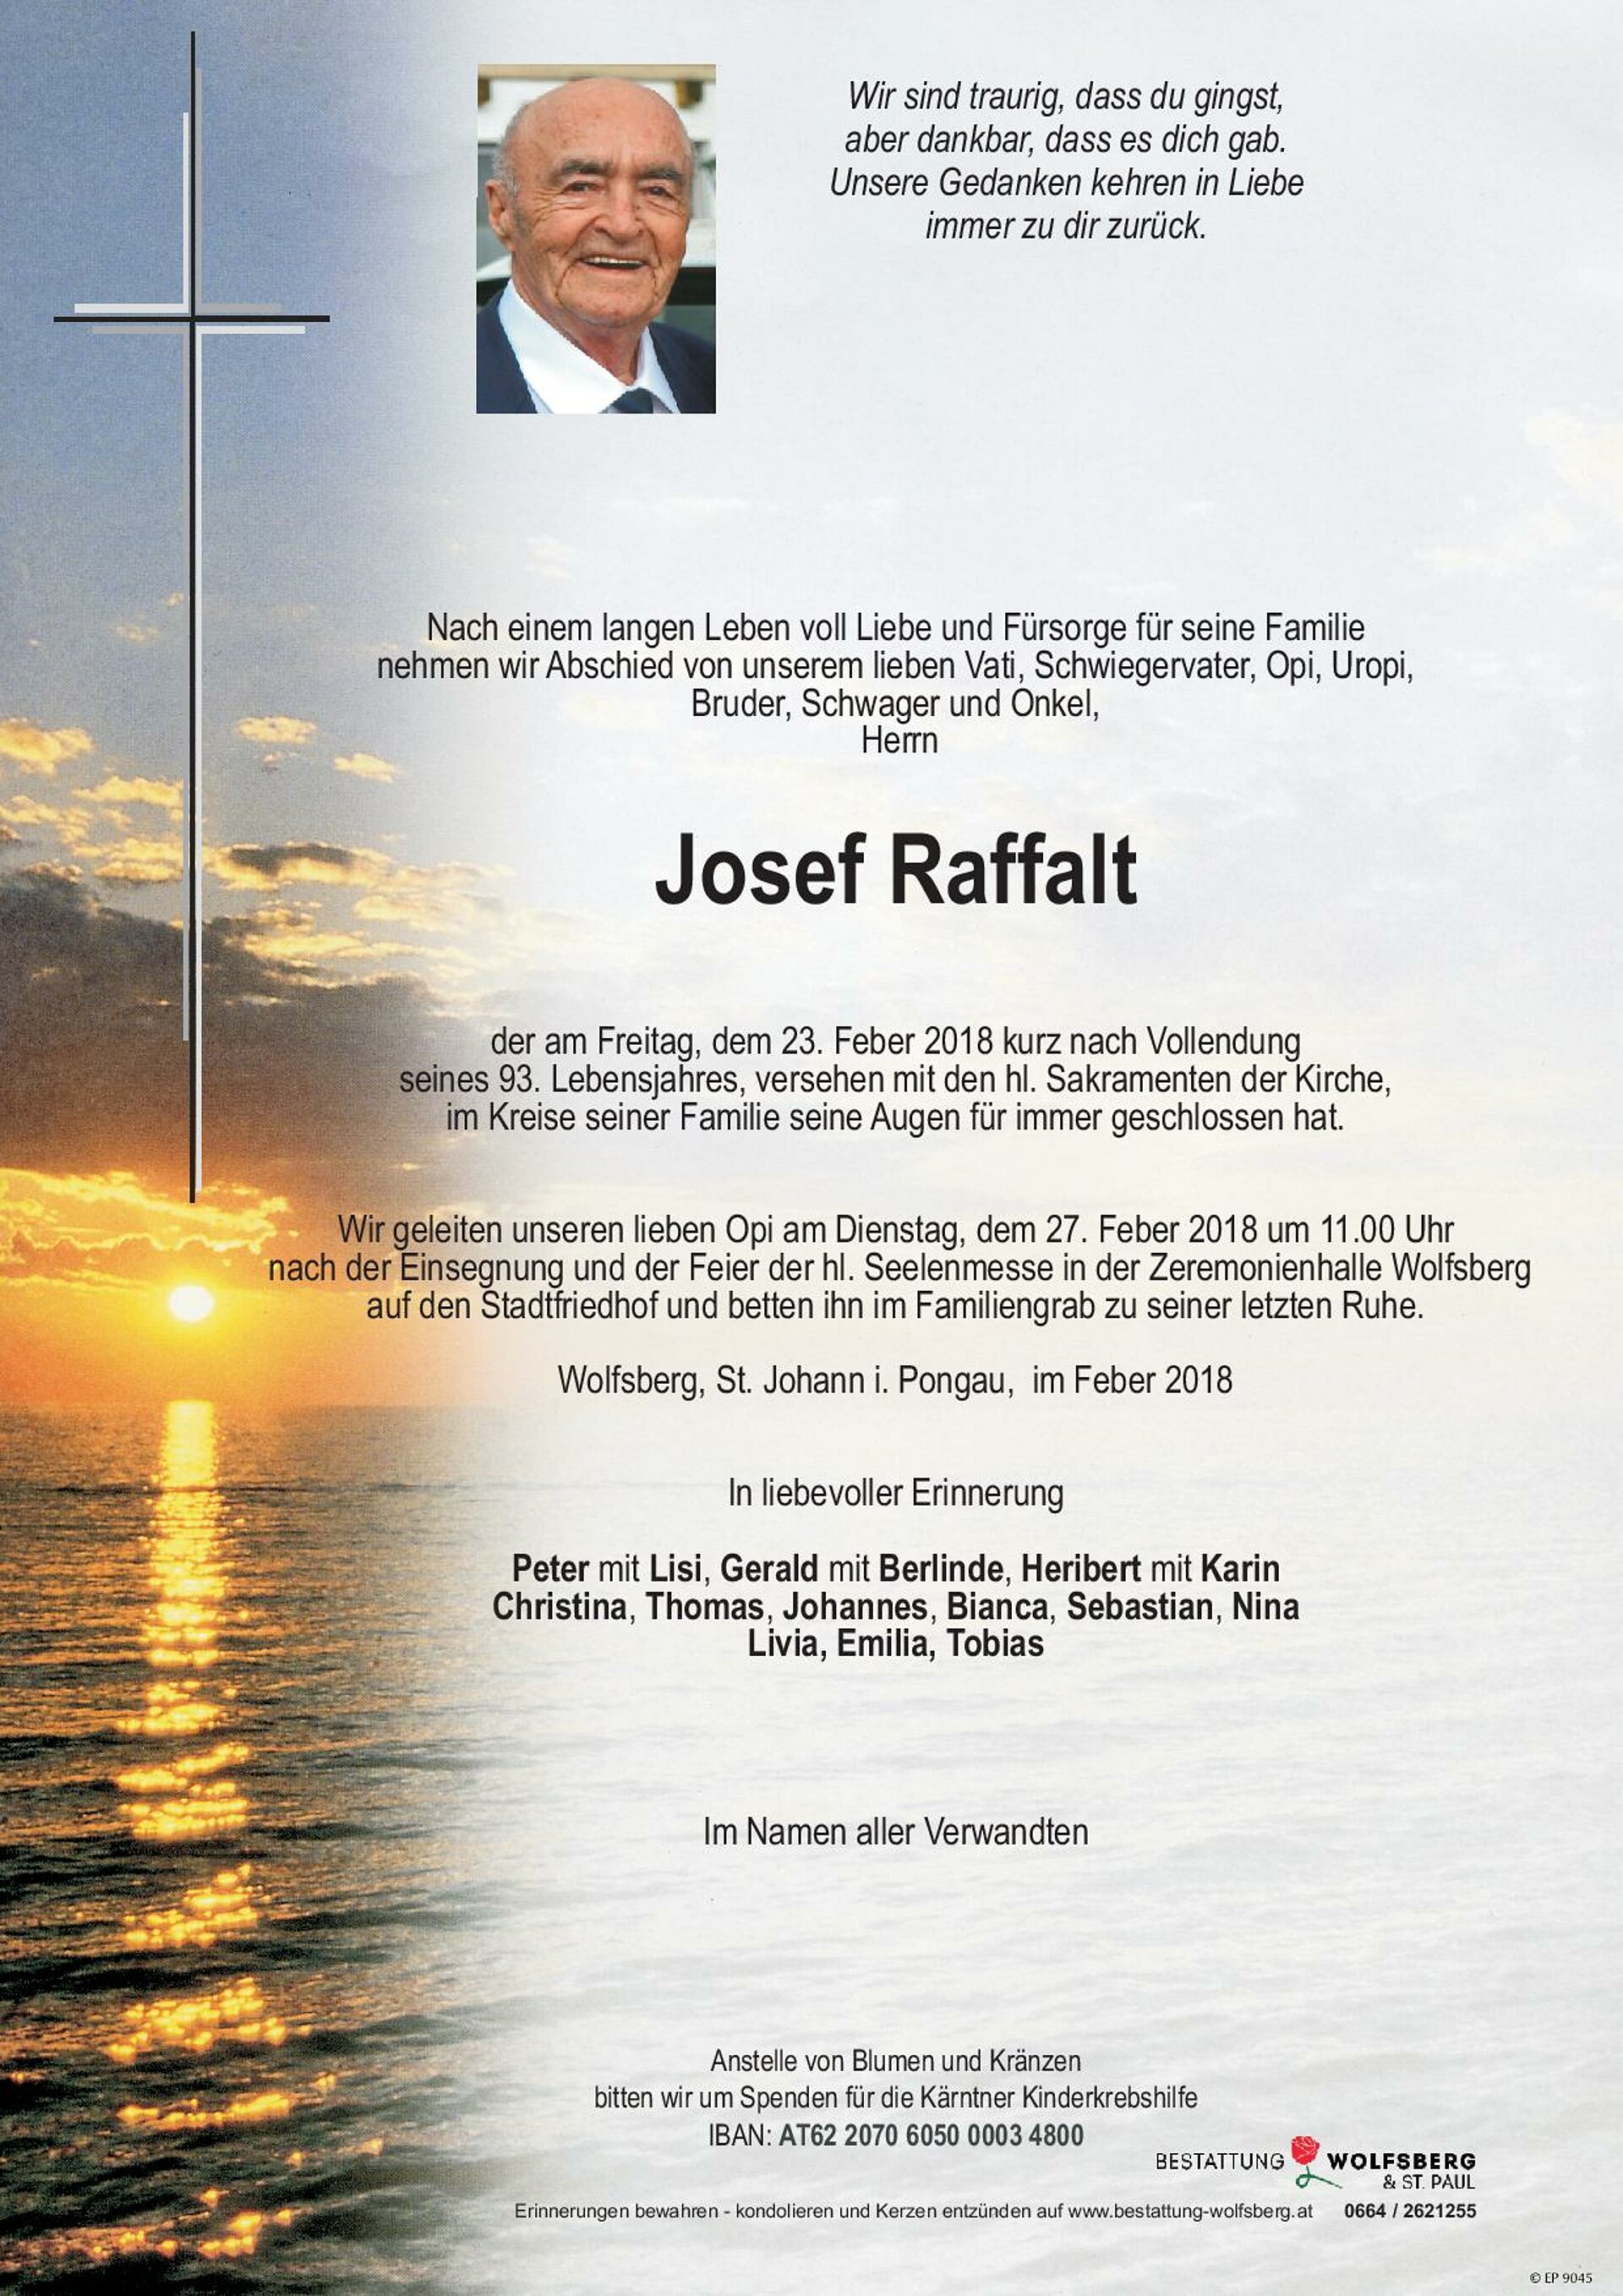 Raffalt-Josef-page-001.jpg